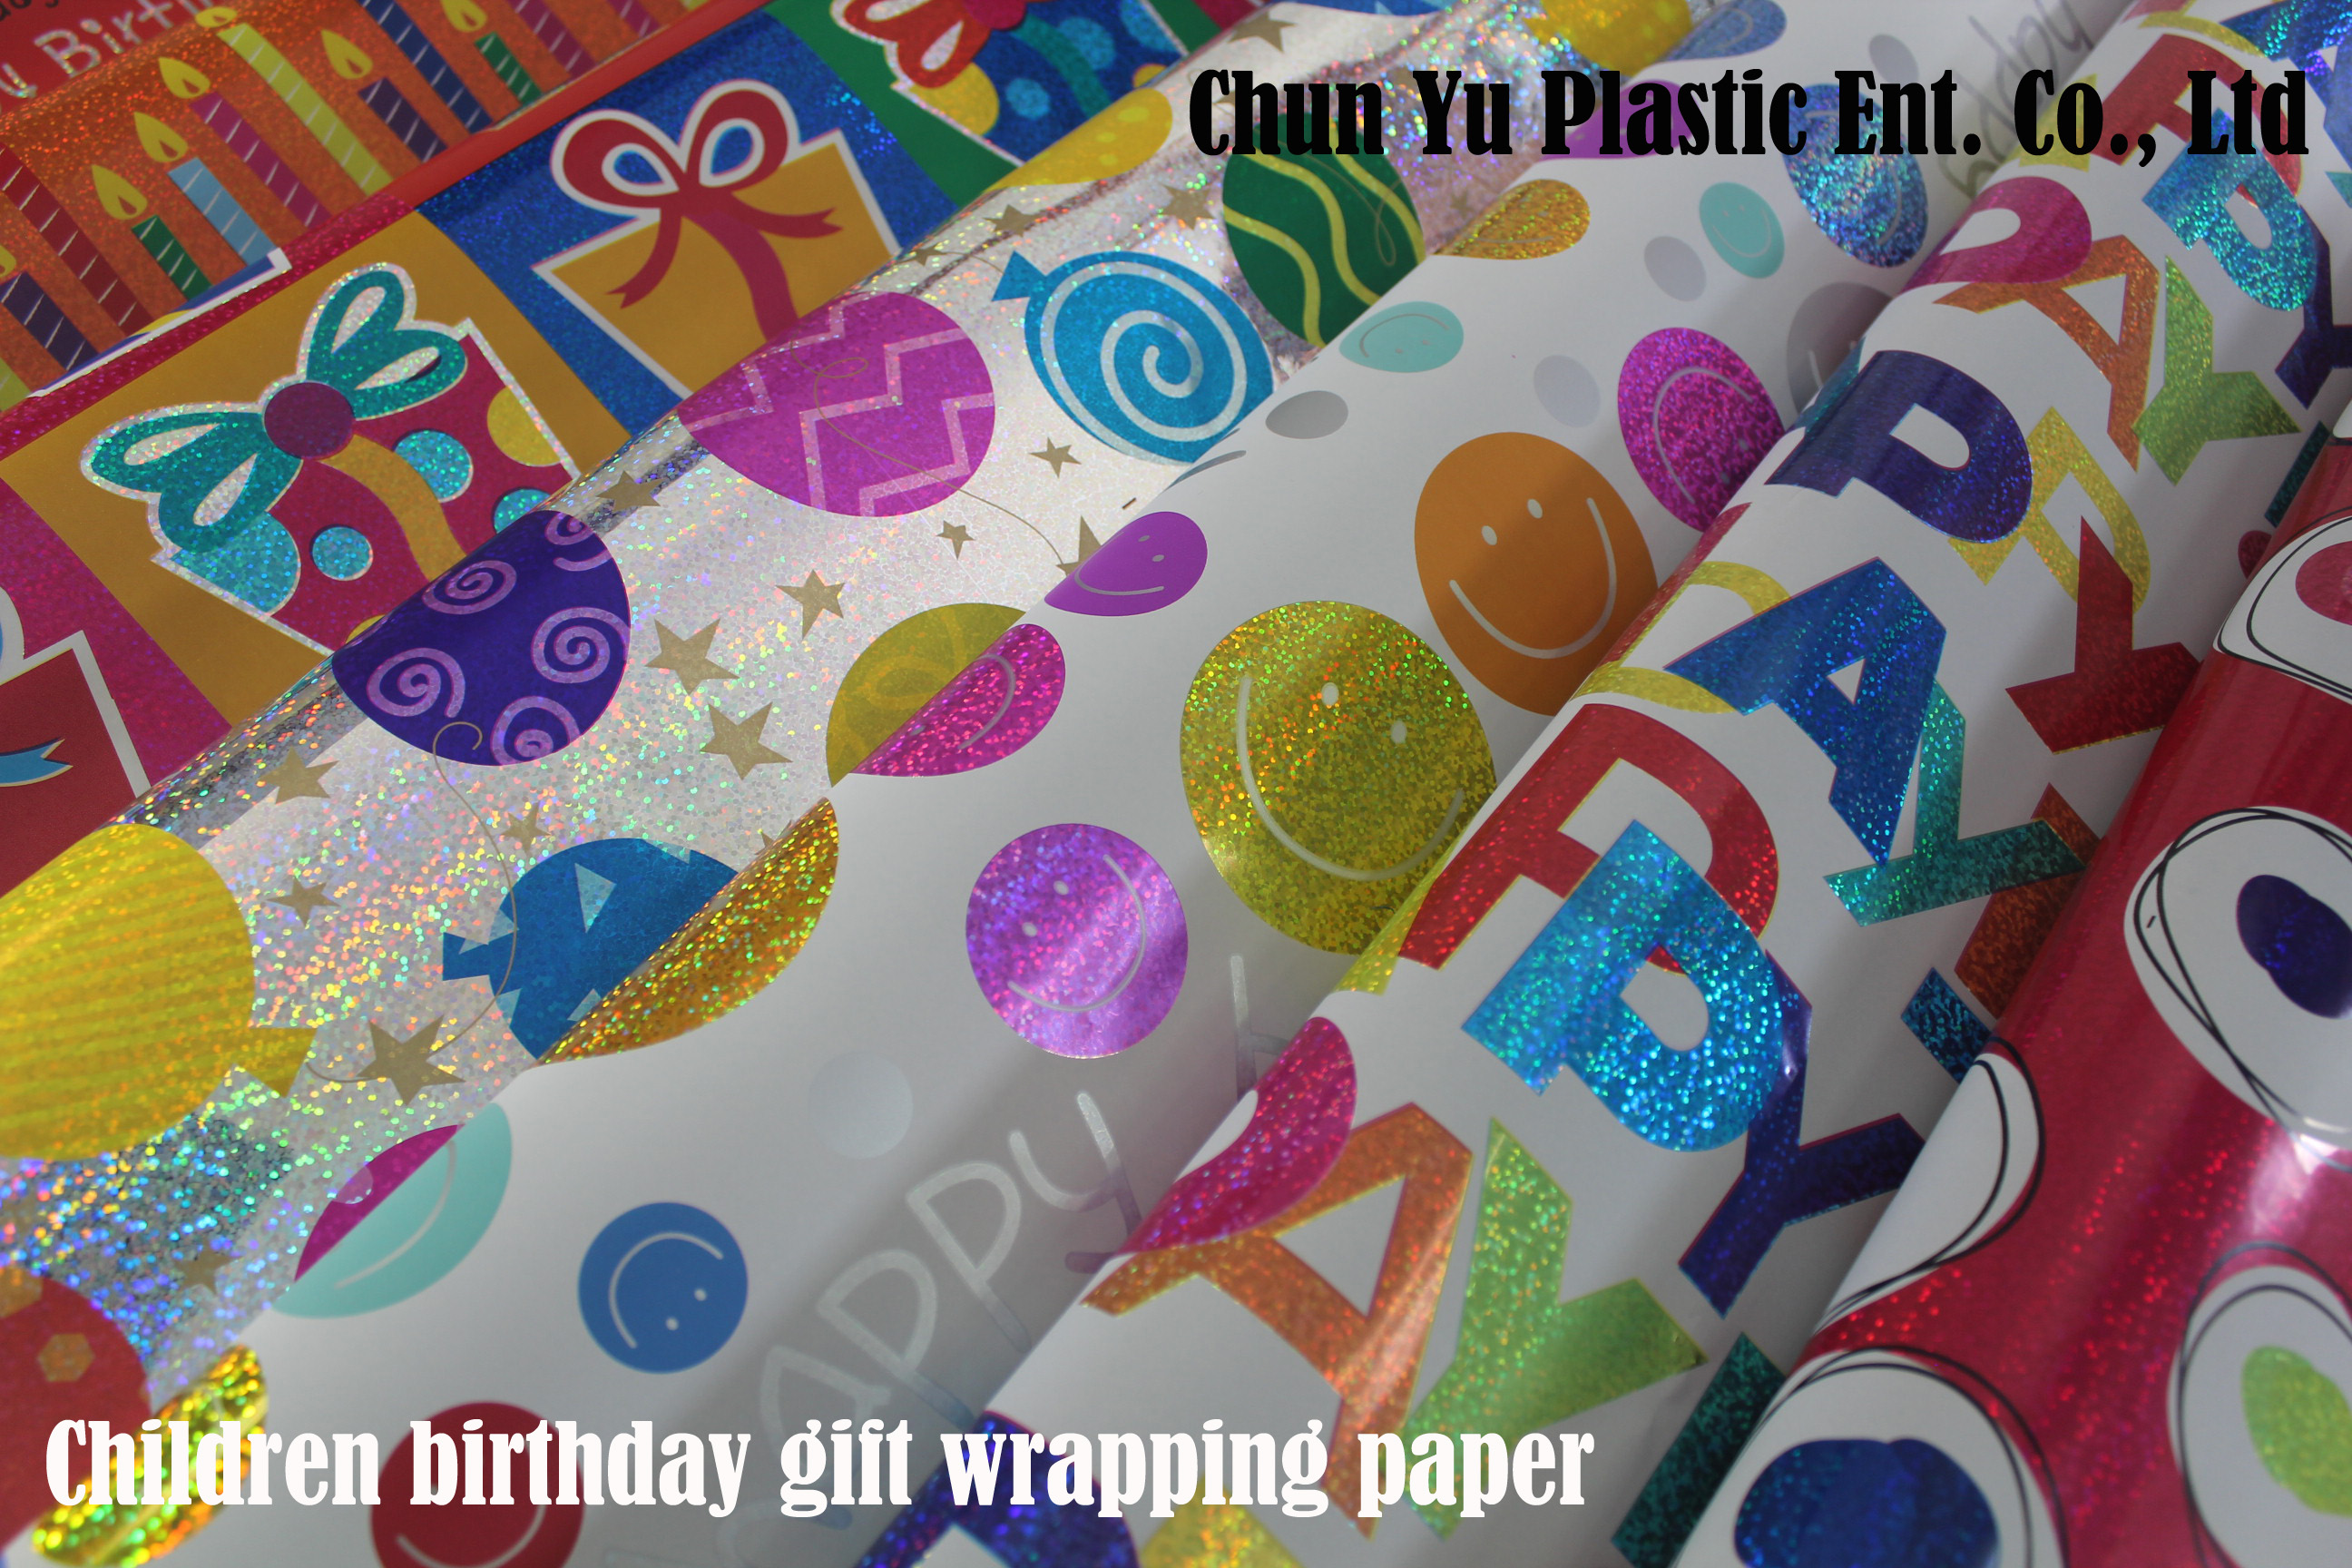 Chun Yu Plasticmemproduksi kertas kado untuk kado anak dan pesta ulang tahun untuk anak perempuan dan laki-laki